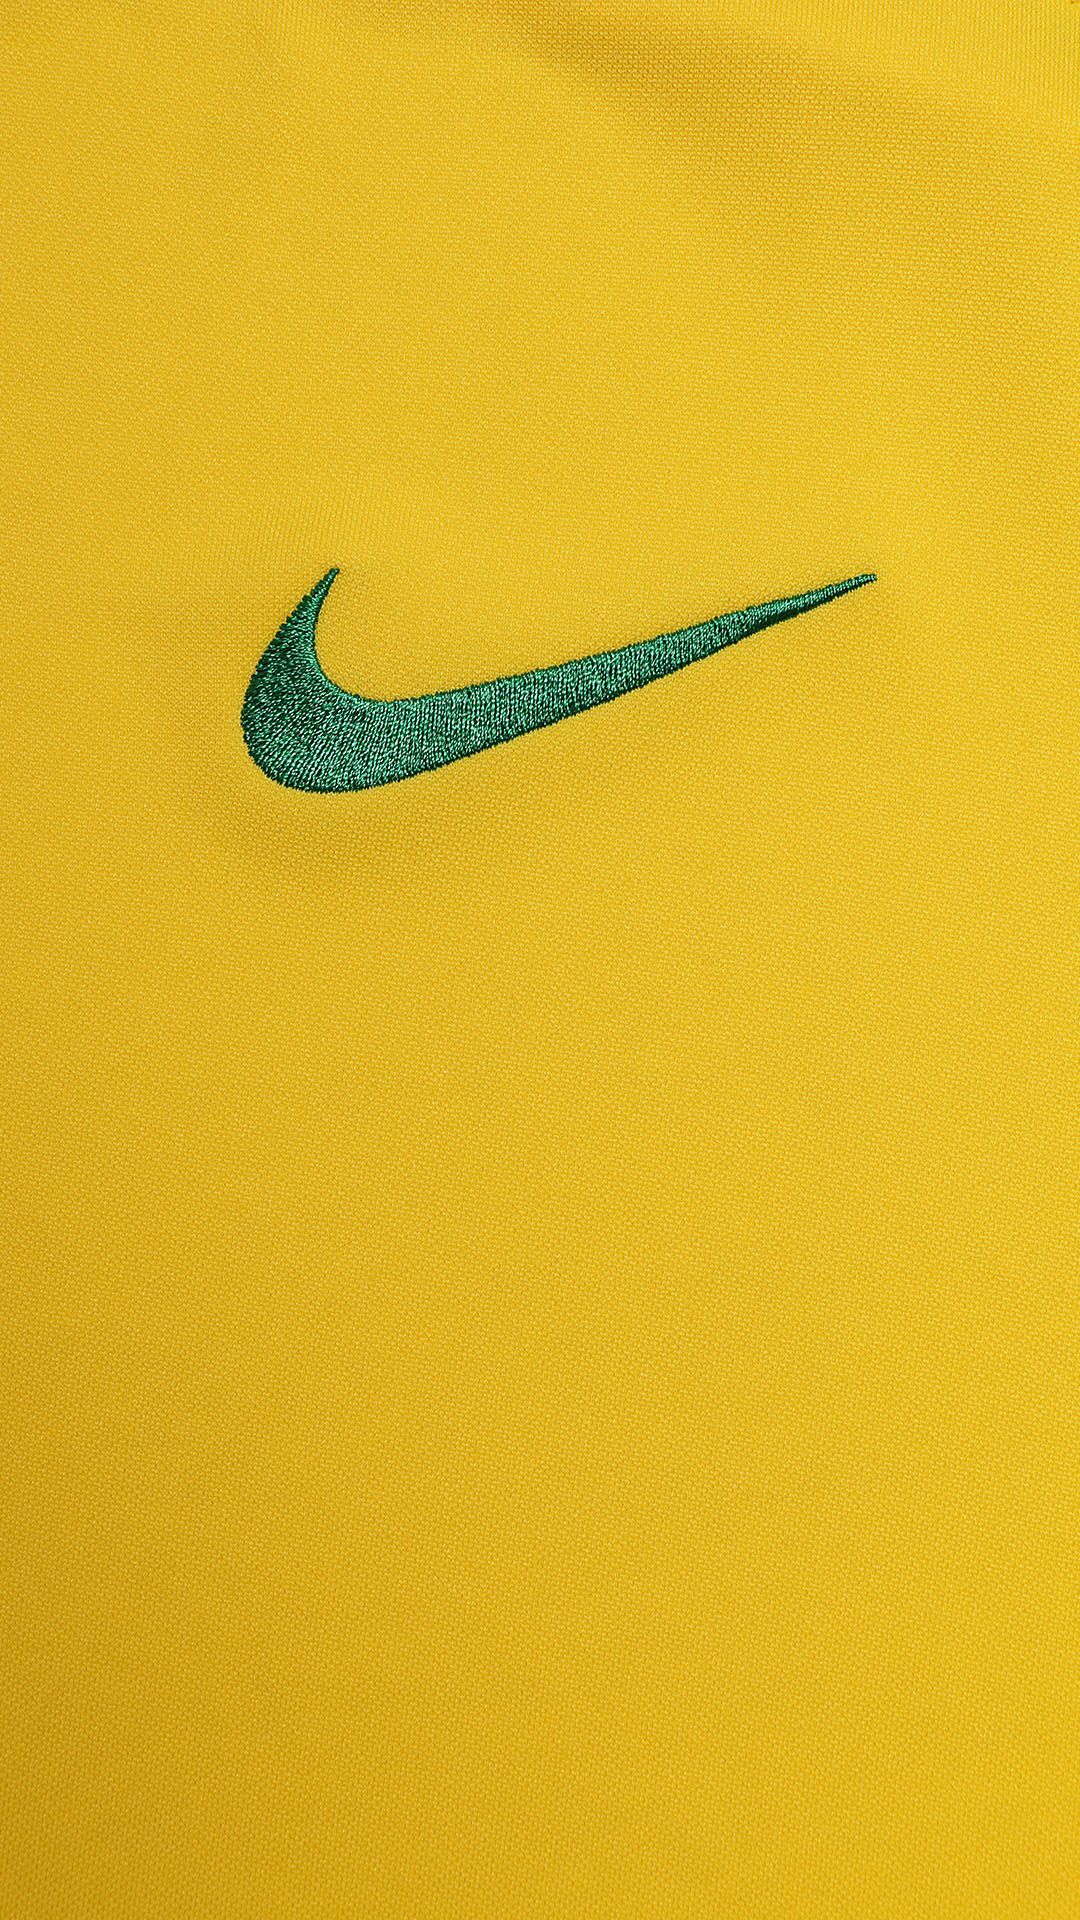 Nike Wallpaper Yellow. Nike wallpaper, Nike logo wallpaper, Nike wallpaper iphone